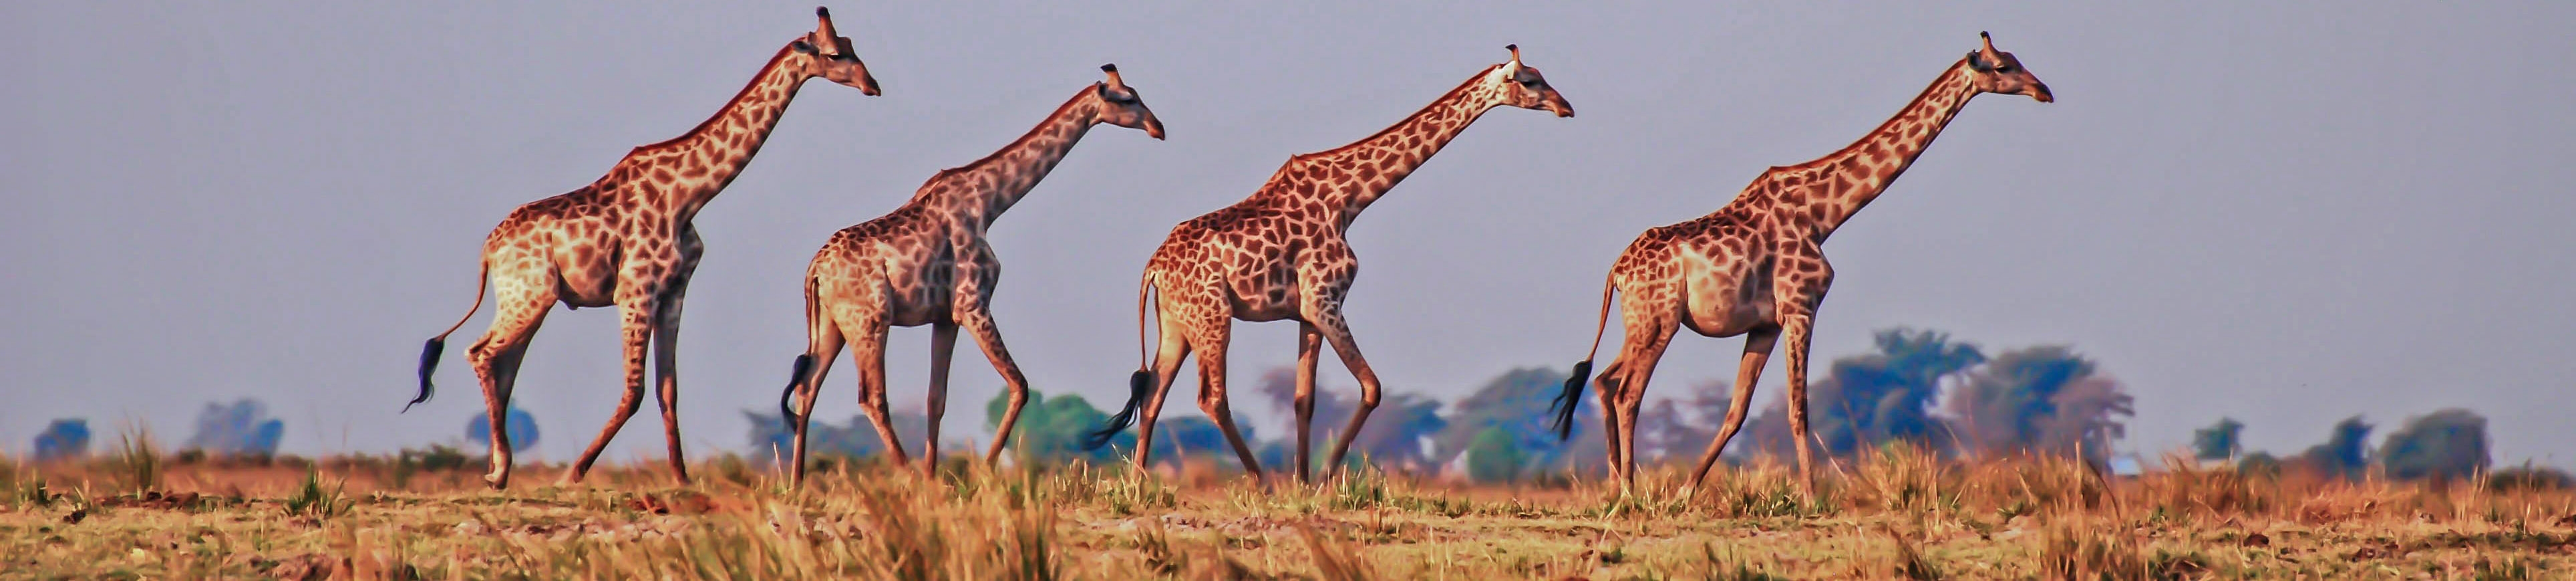 Giraffes on the Chobe floodplain | SGS Africa